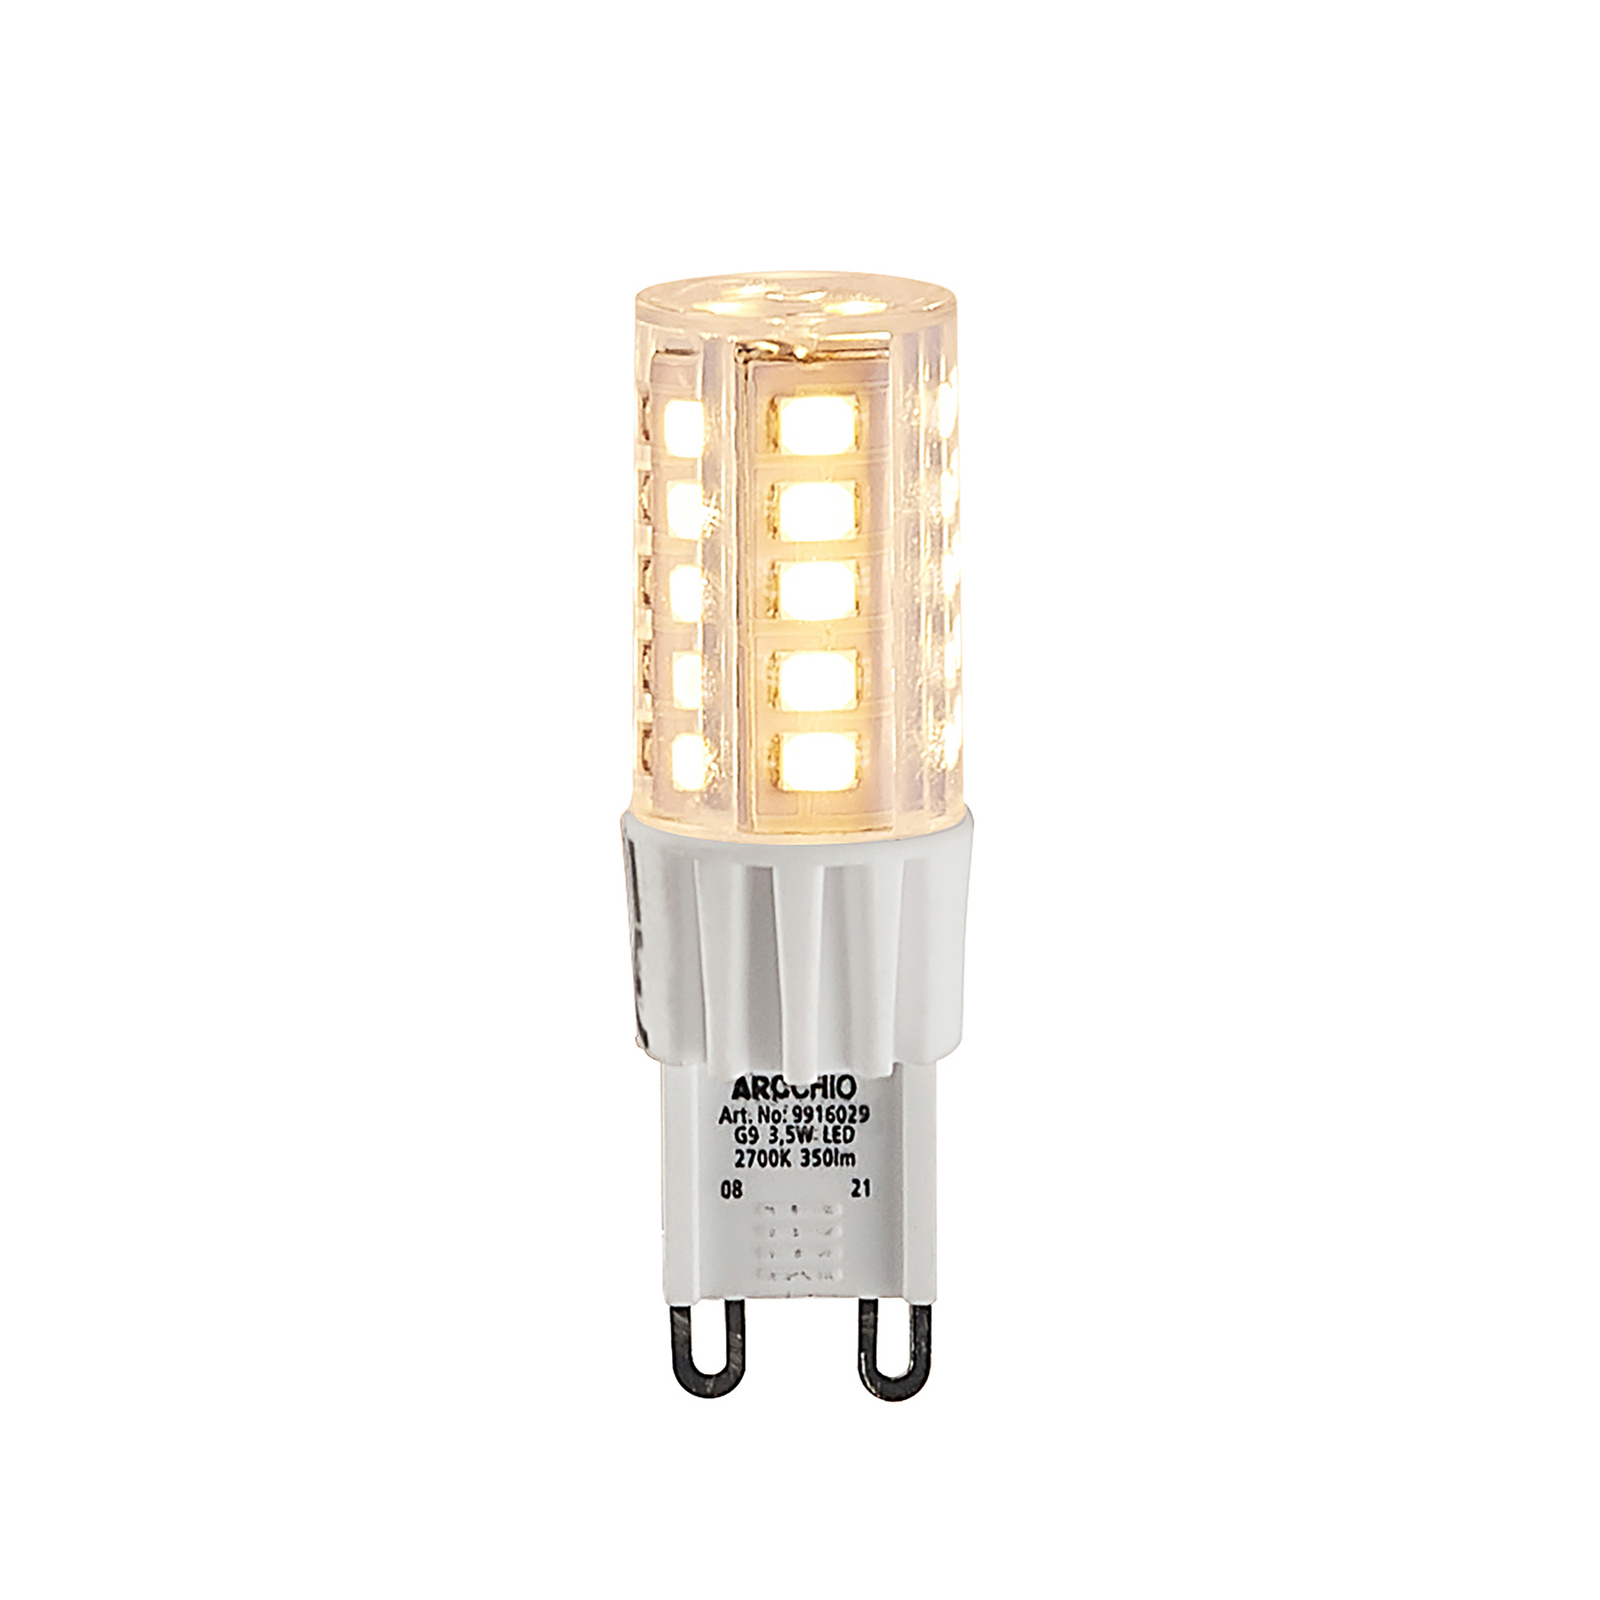 Arcchio bombilla LED bi-pin G9 3,5W 830 2 ud